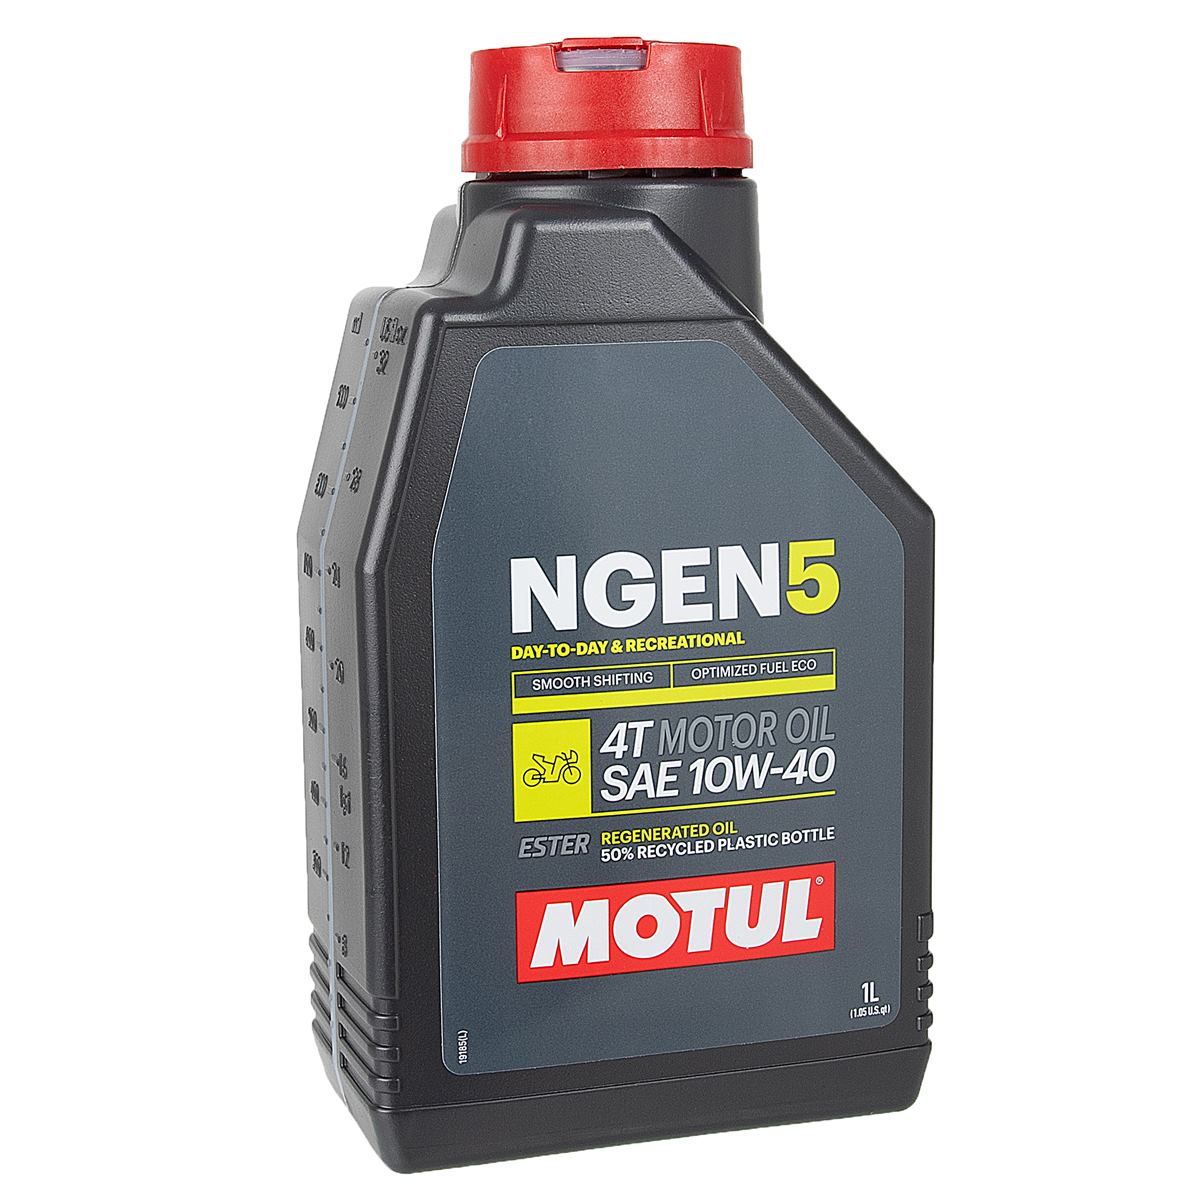 https://www.maciag-offroad.de/shop/artikelbilder/normal/157185/motul-motorenoel-motor-oil-ngen-5-1.jpg